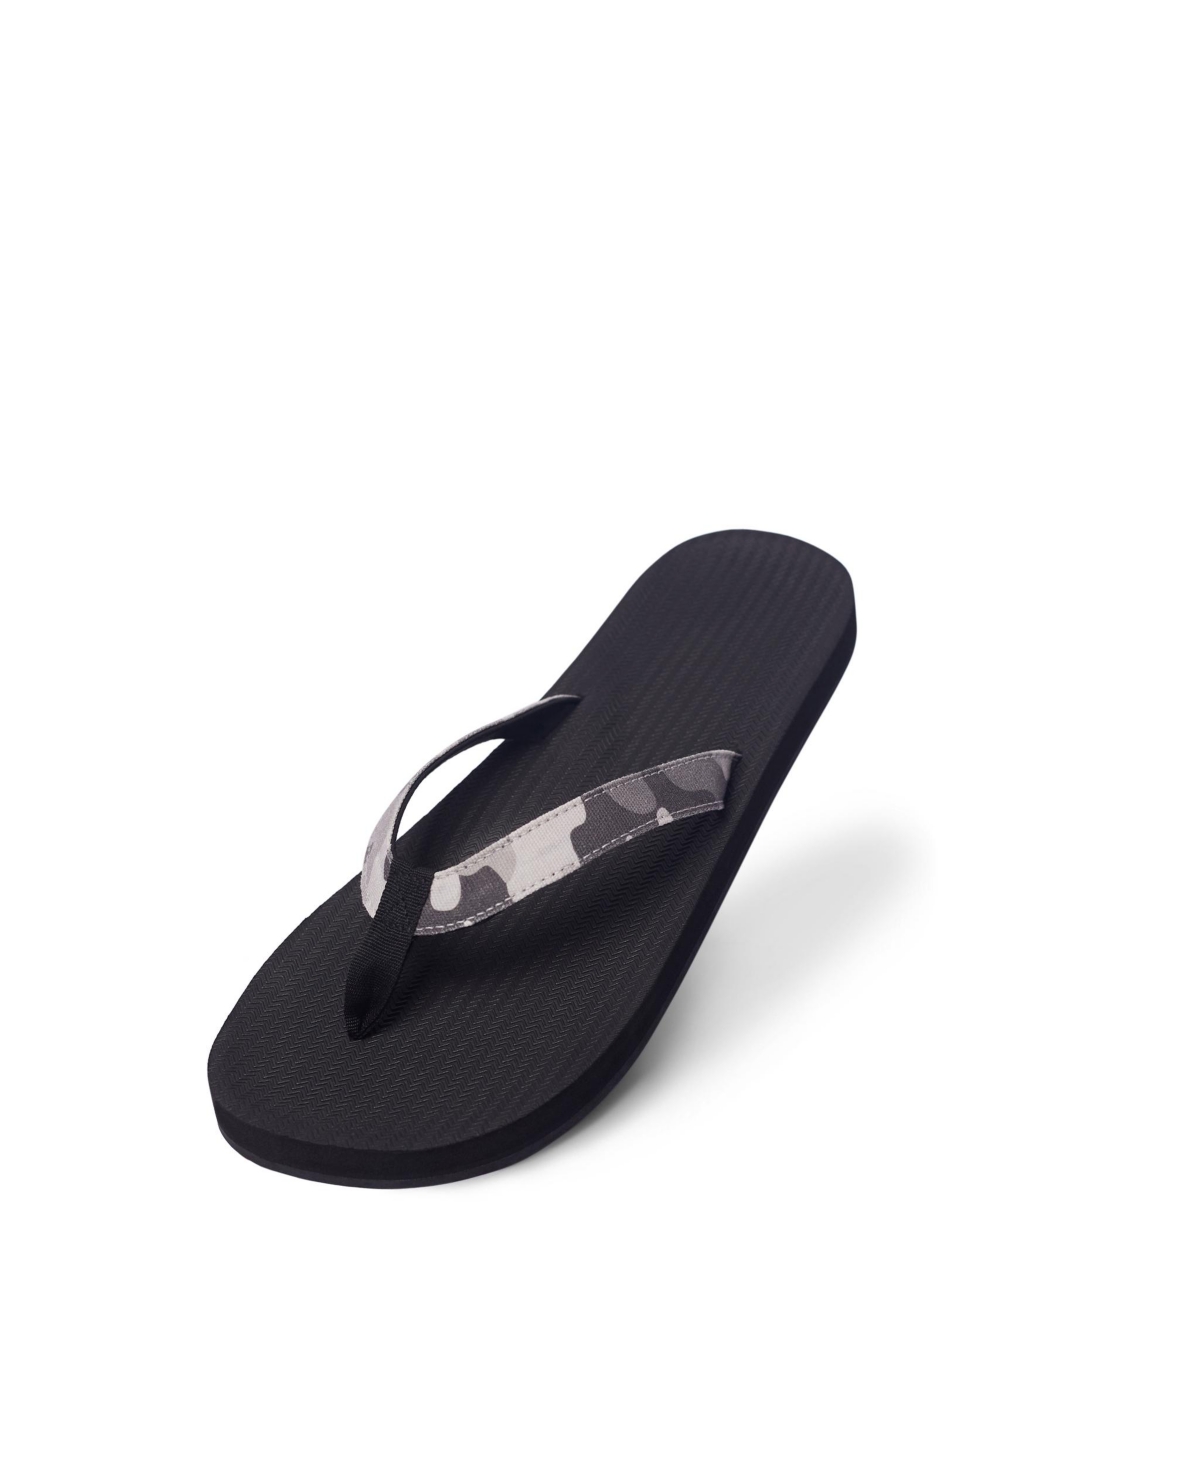 Women's Flip Flops Camo - Black/white camo